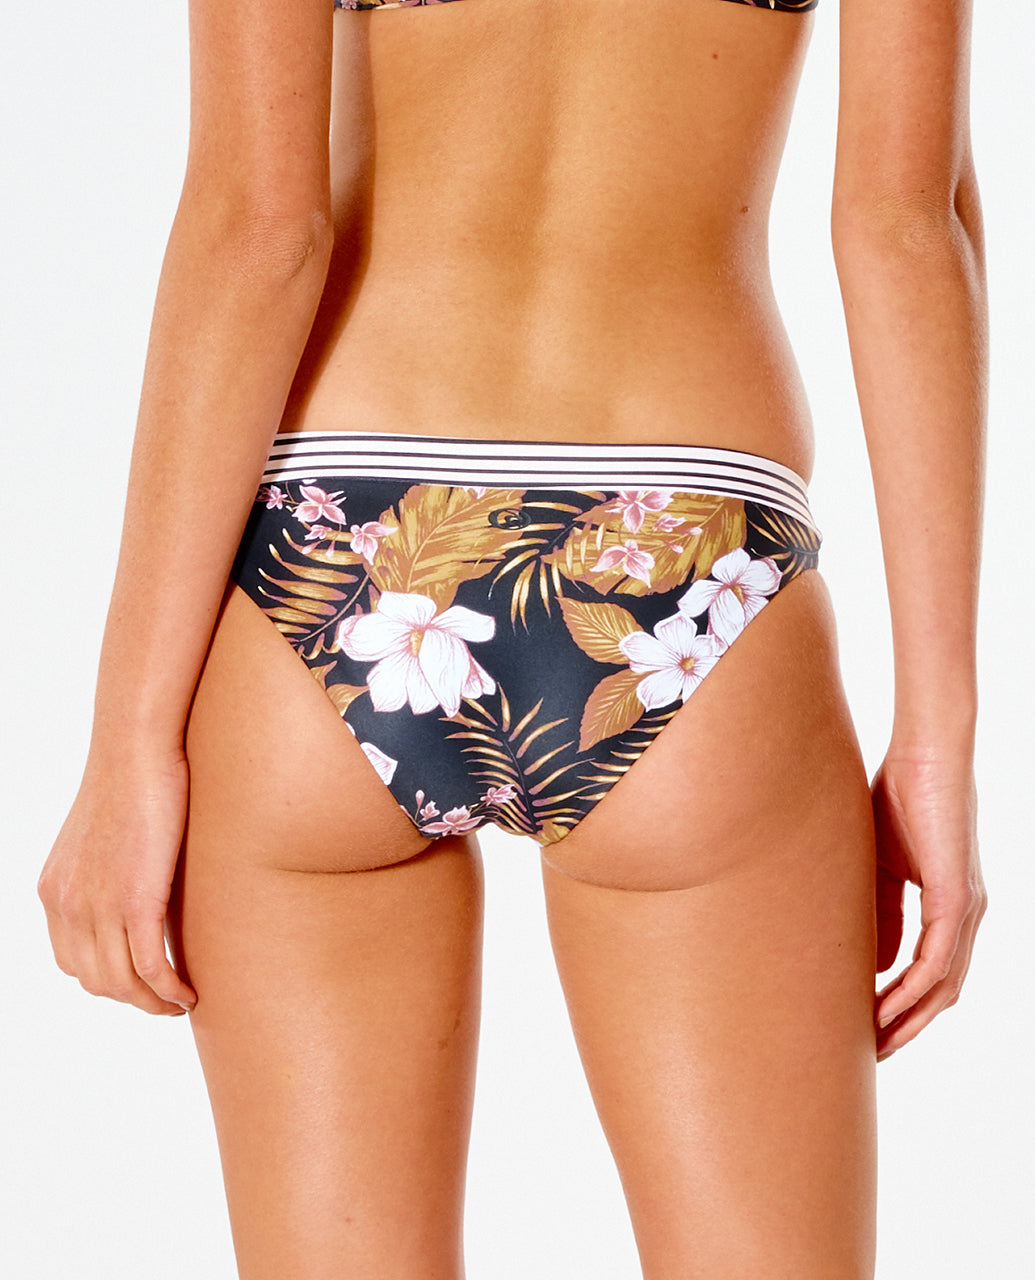 Women's PLAYABELLA MIRAGE Bikini Bottoms